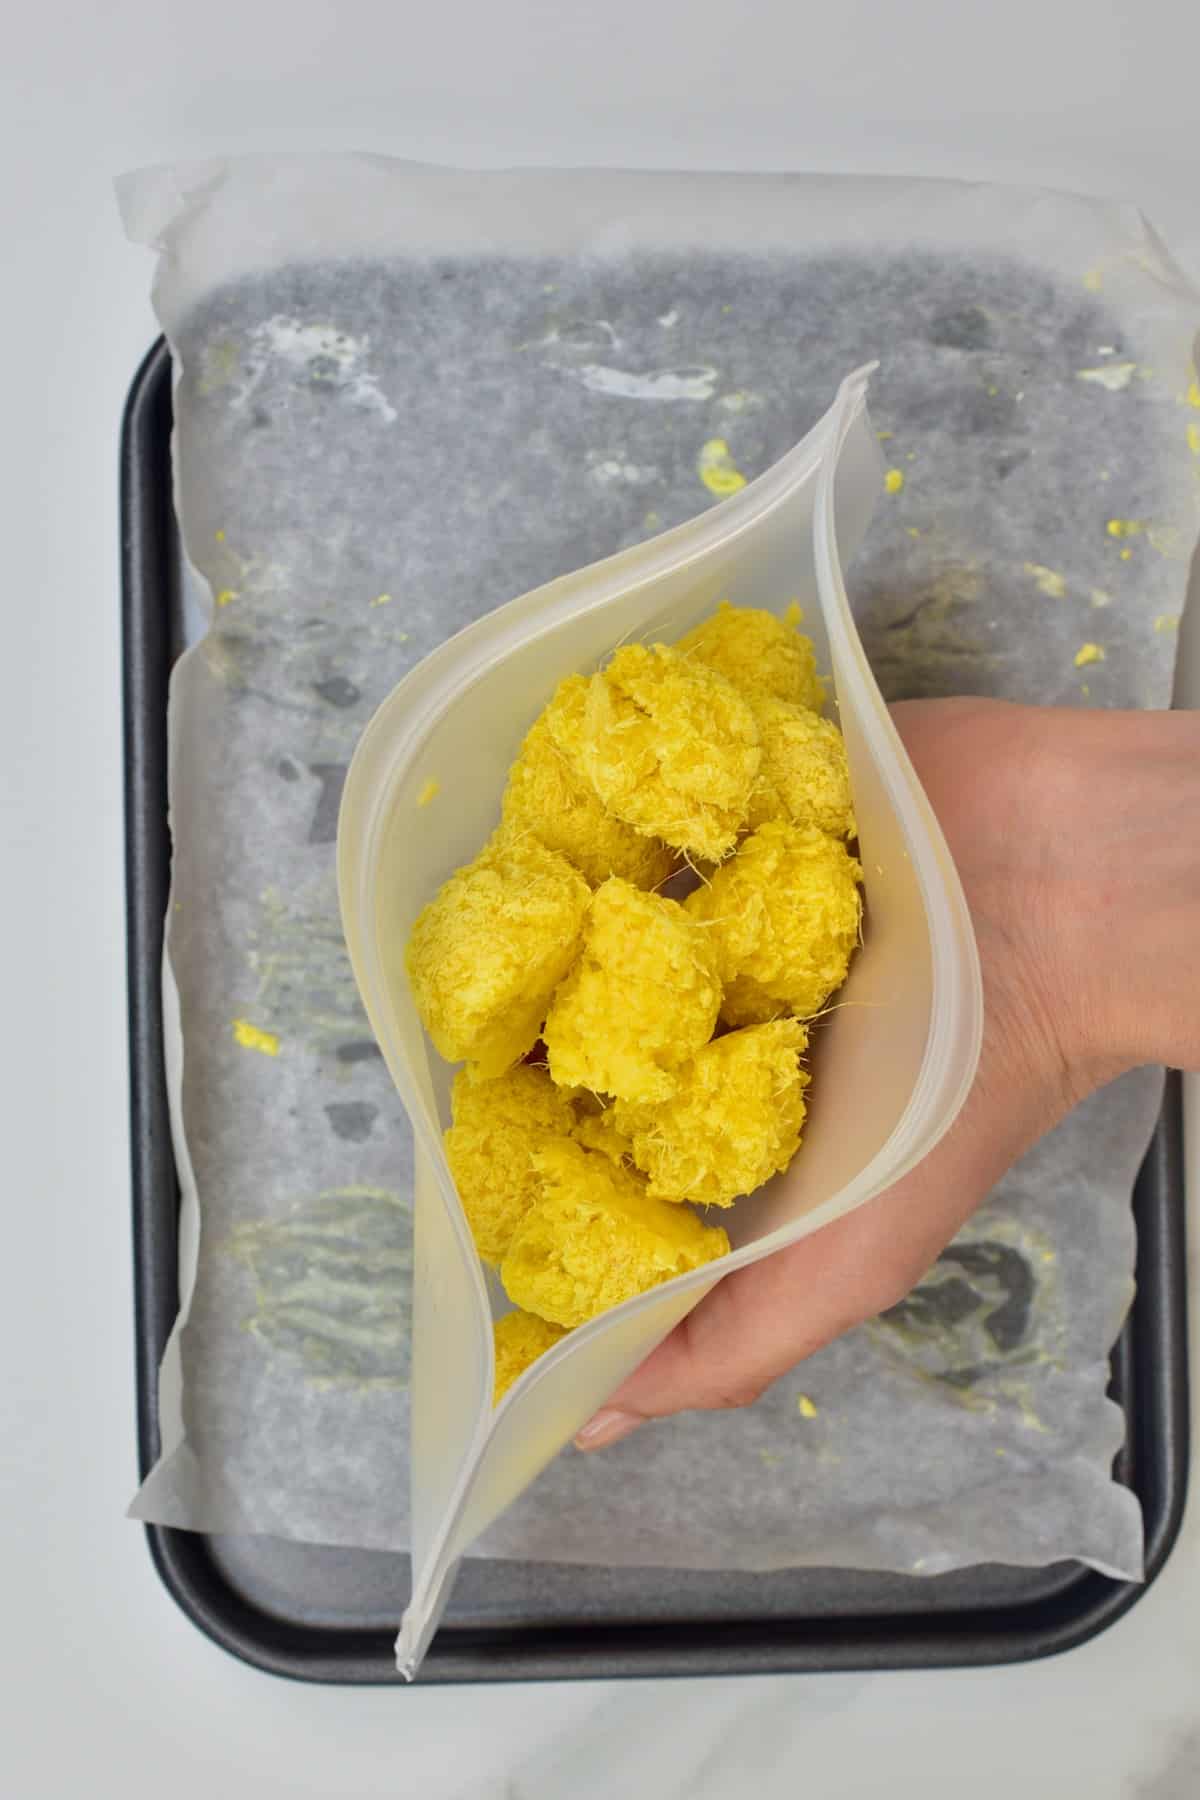 Ginger paste balls in a freezer bag